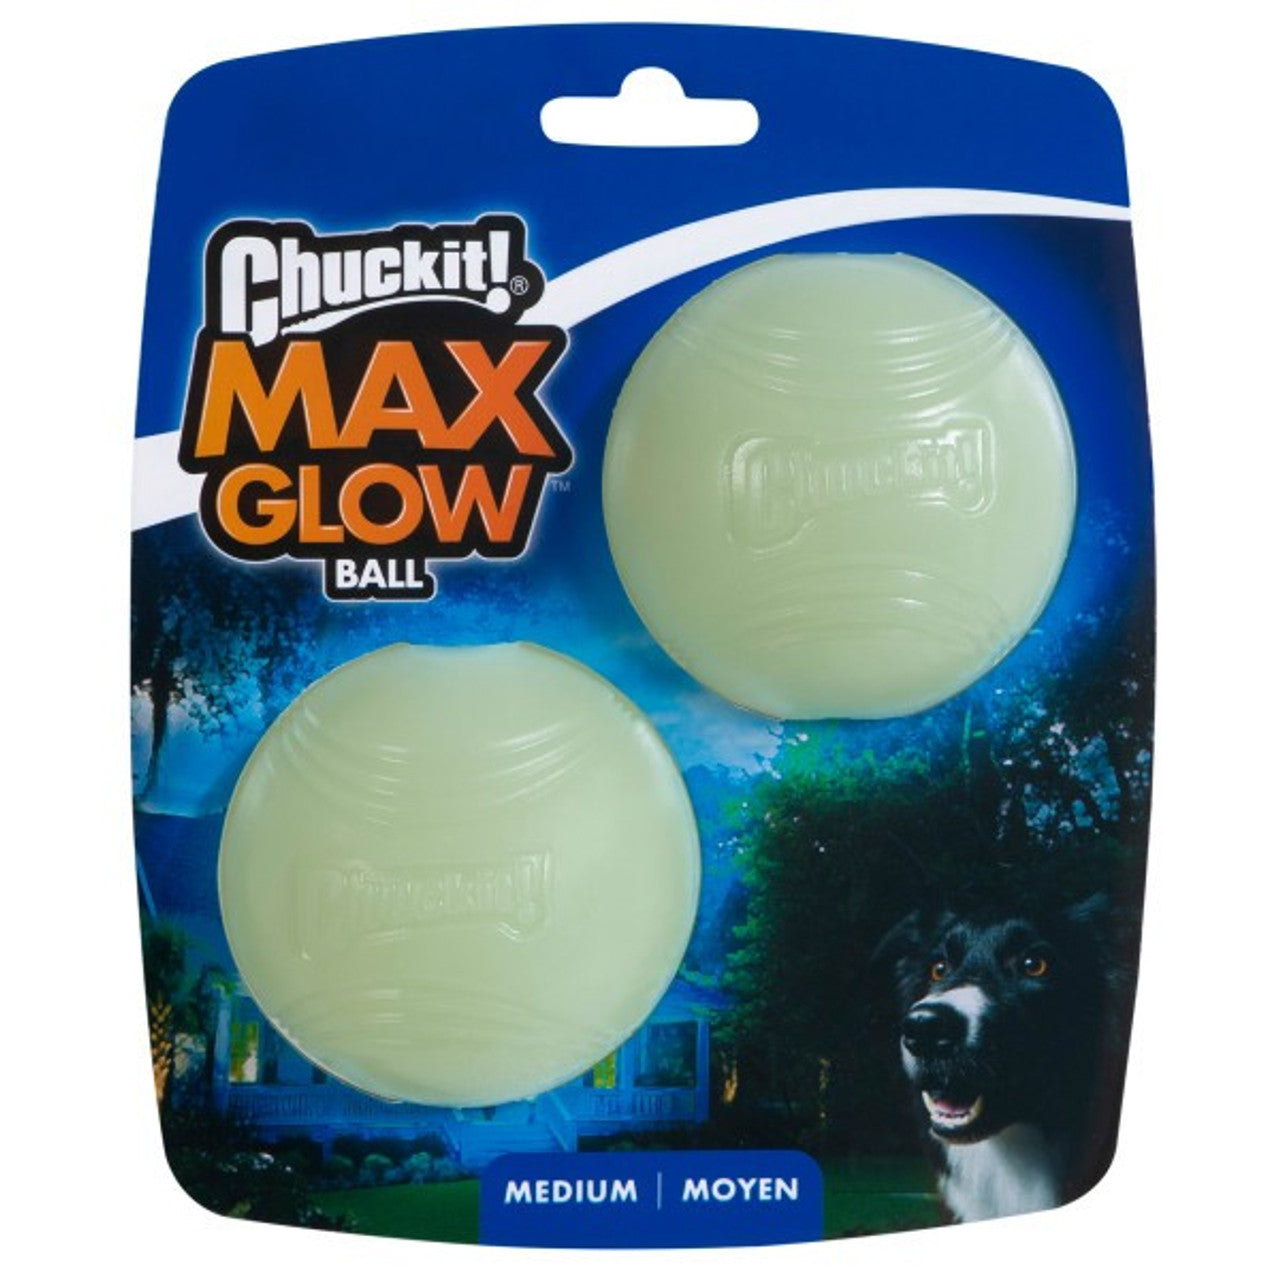 Chuckit! Max Glow Balls Medium (2pk)